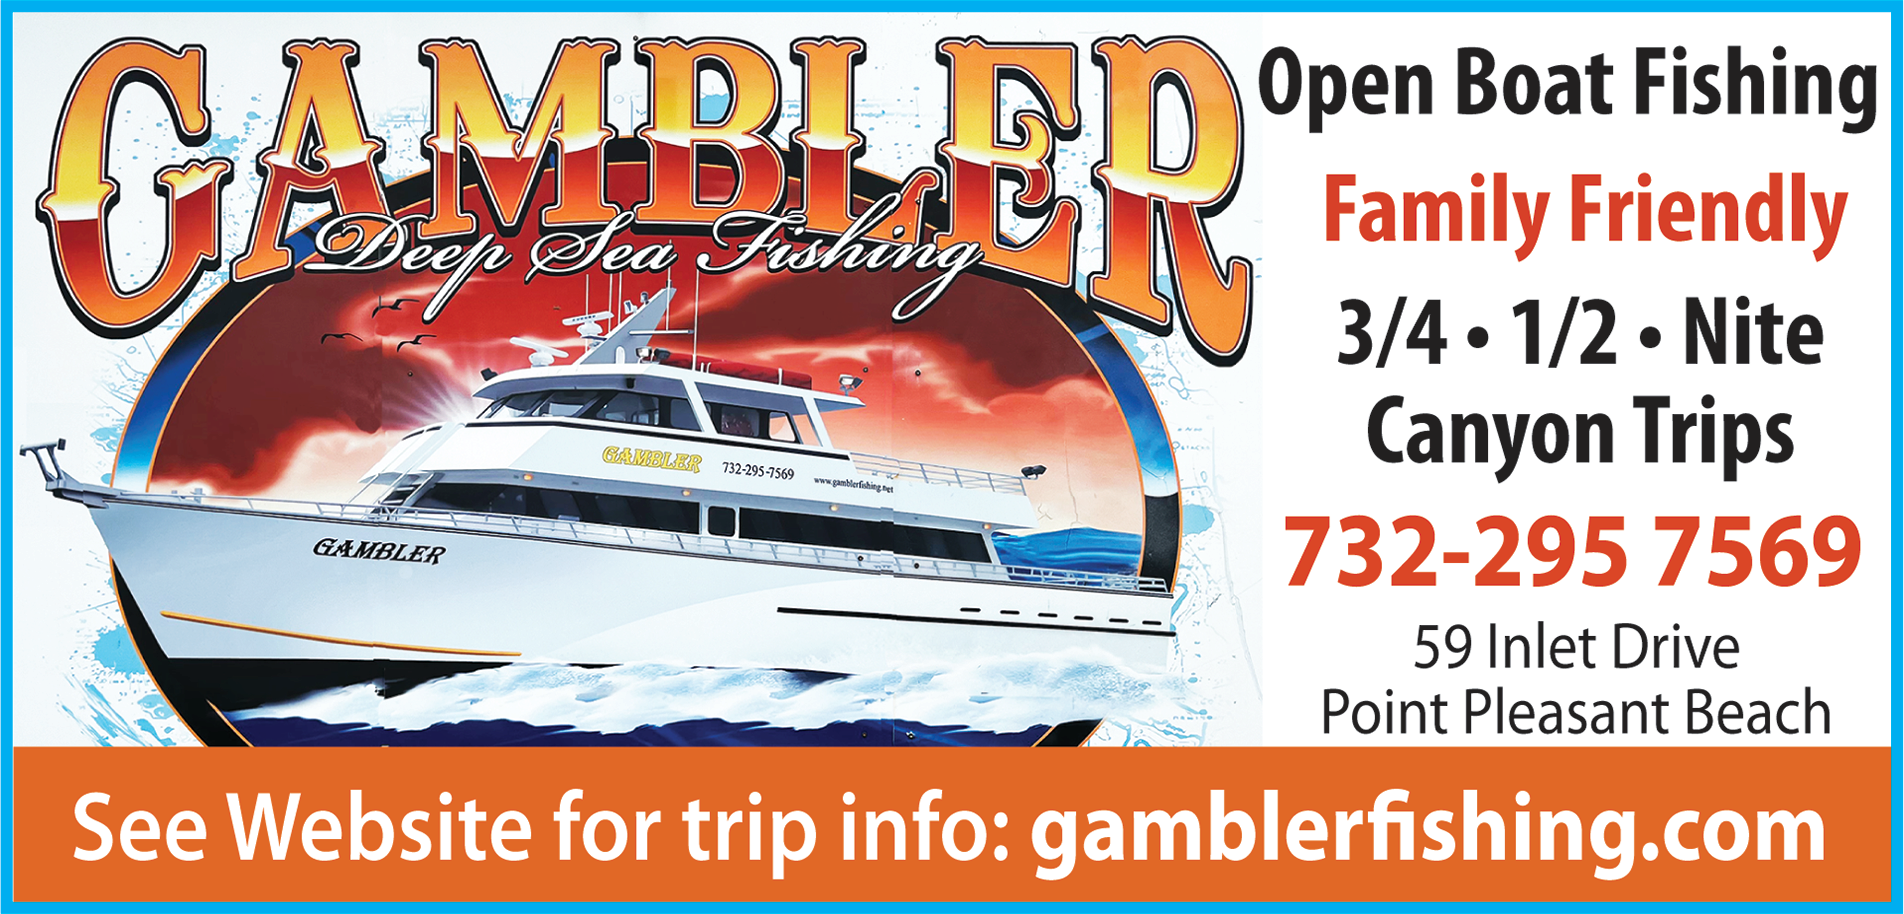 The Gambler Deep Sea Fishing Print Ad